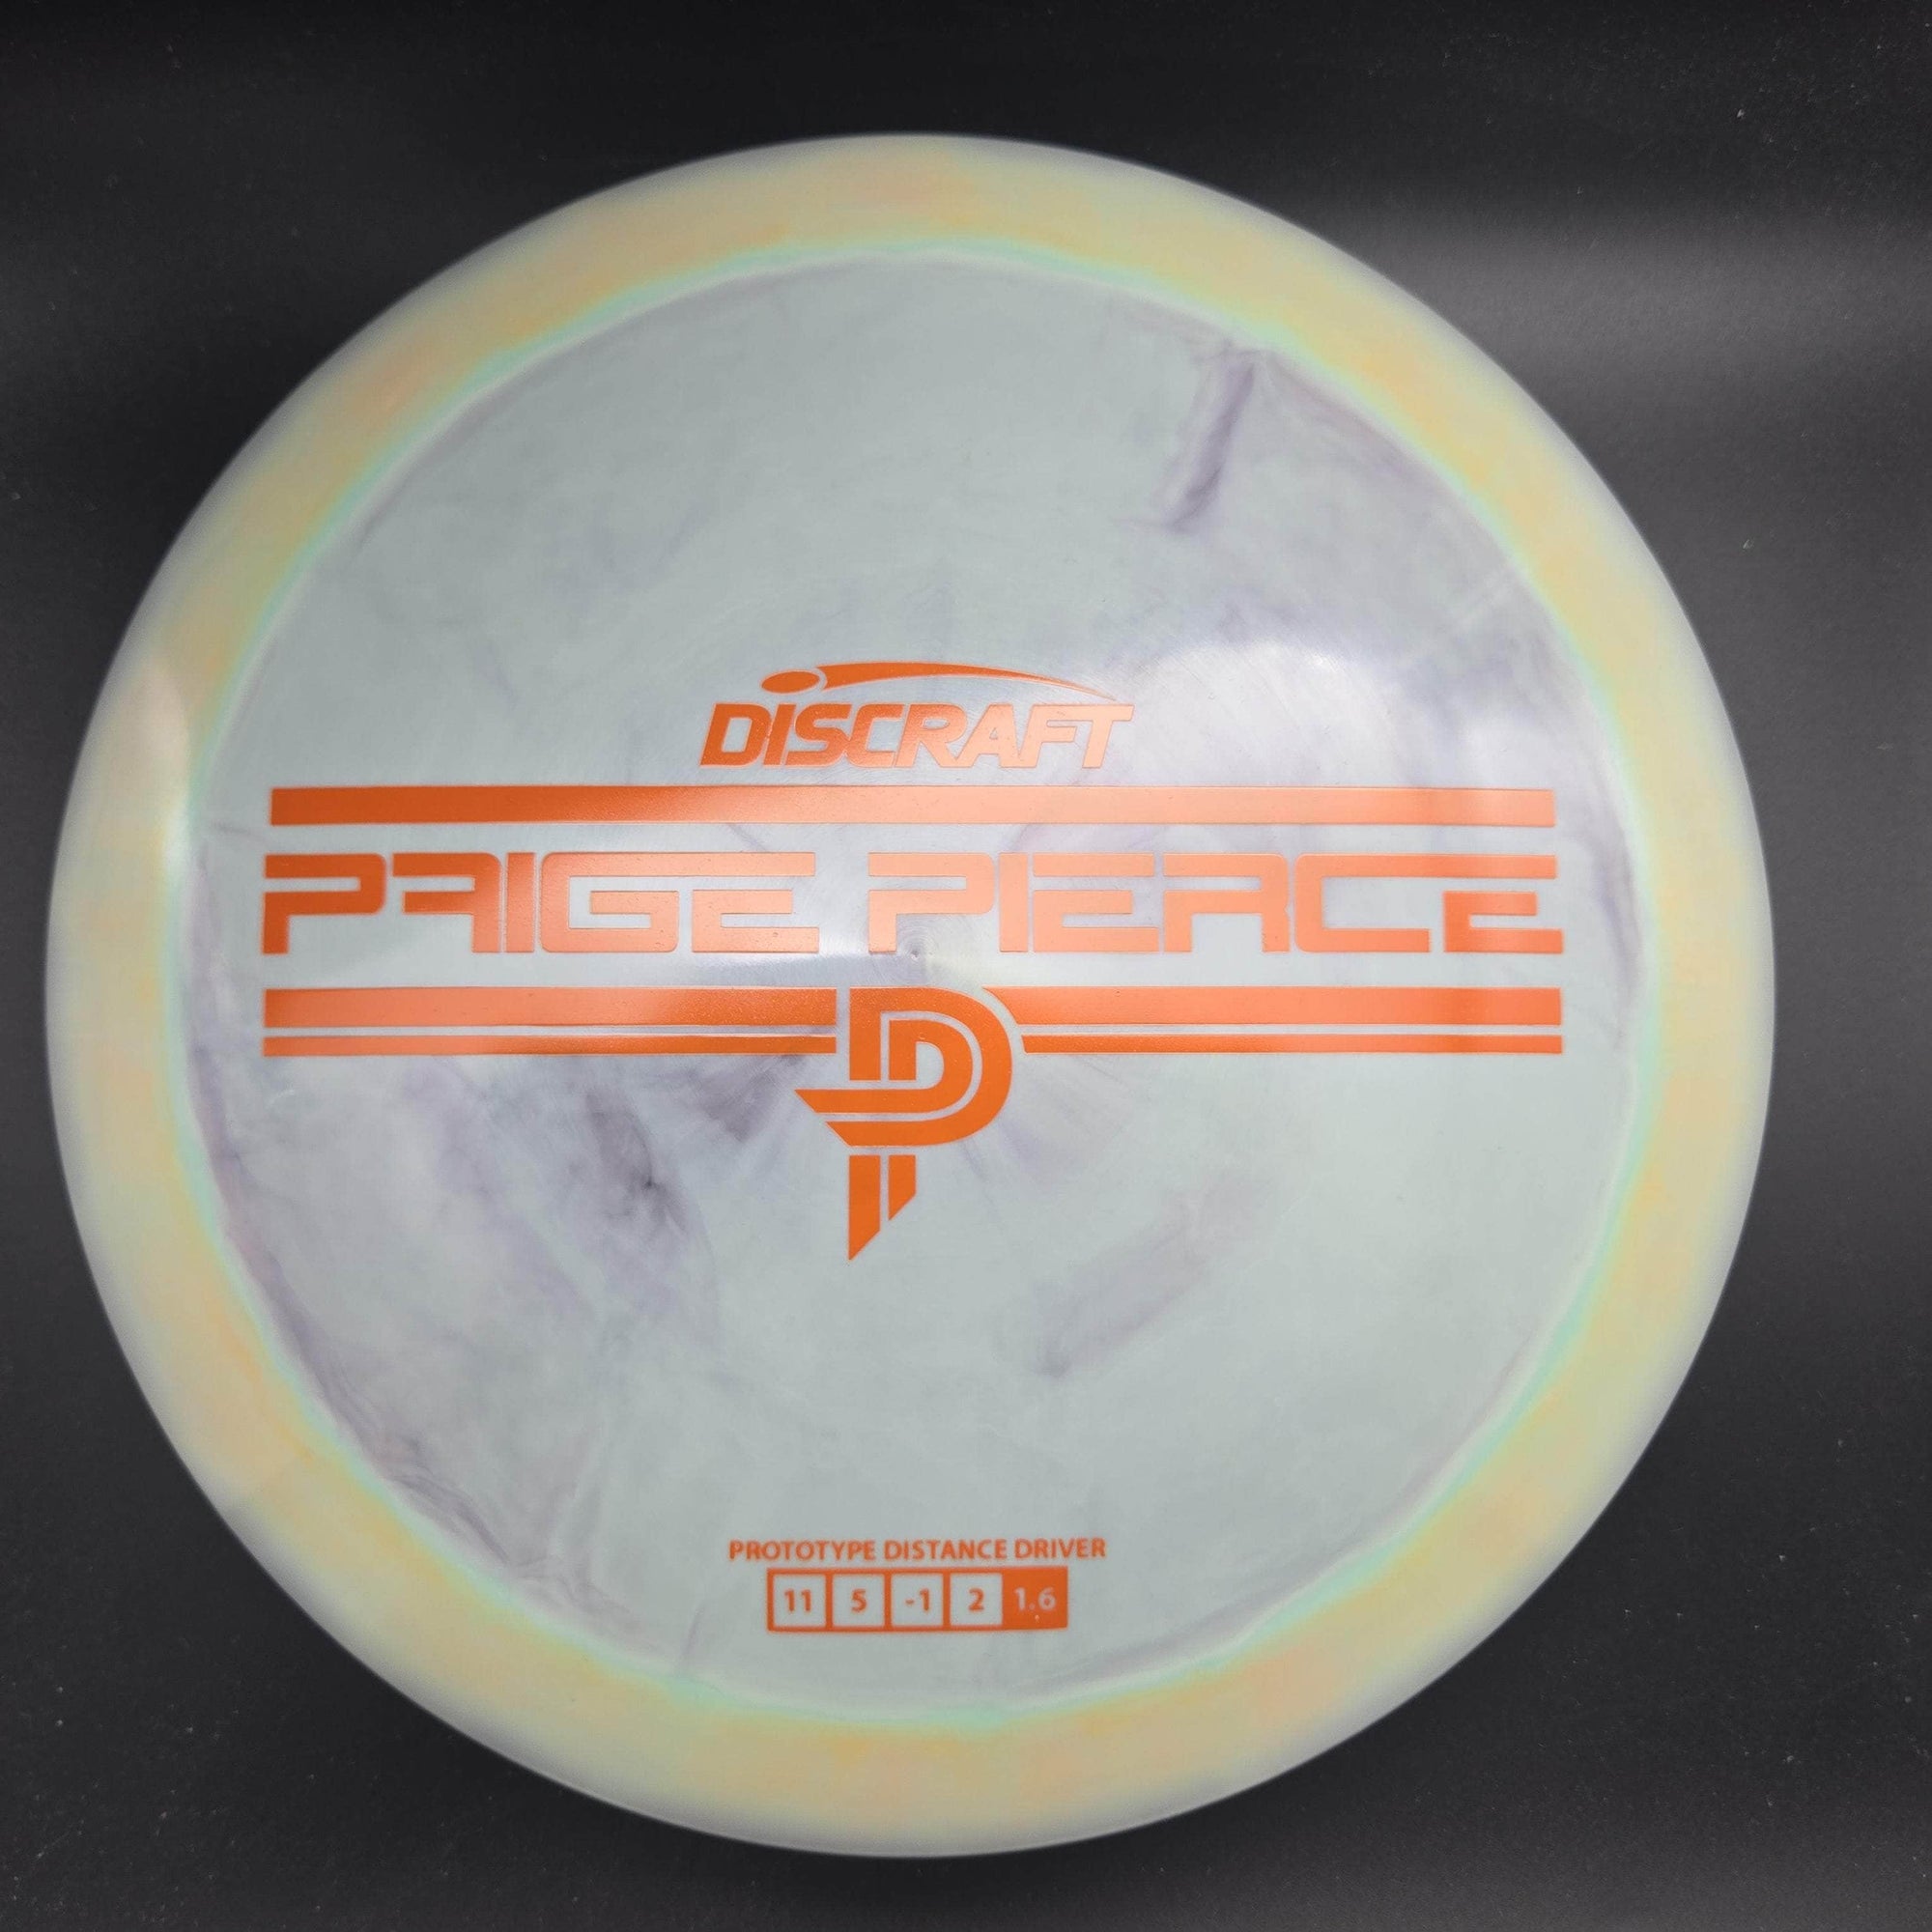 Discraft Distance Driver Yellow/Purple Orange Stamp 174g Drive, ESP, Paige Pierce Prototype